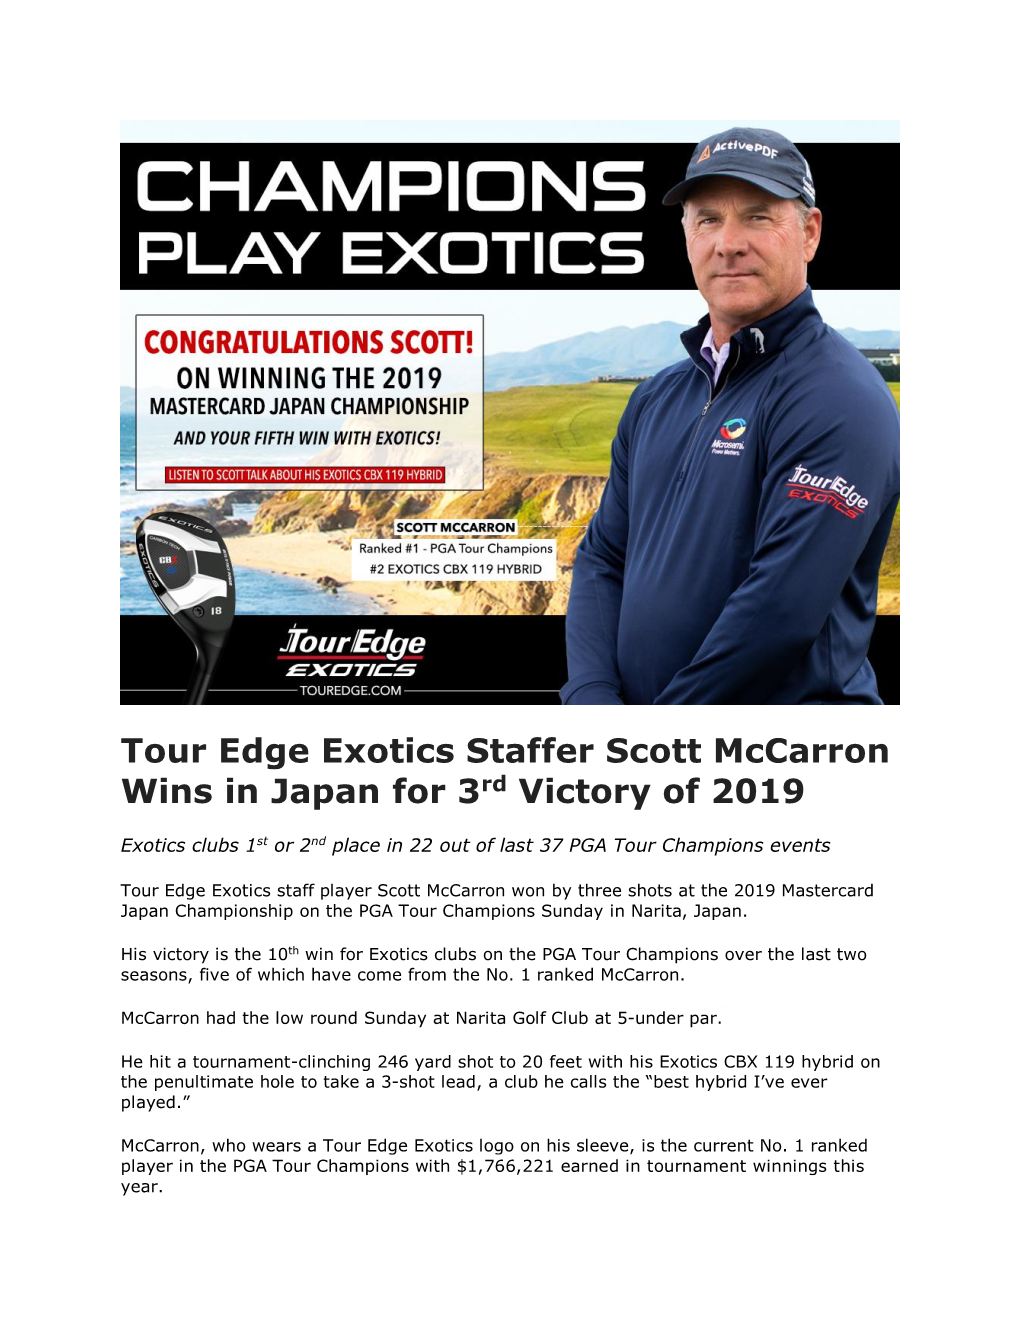 Tour Edge Exotics Staffer Scott Mccarron Wins in Japan for 3Rd Victory of 2019